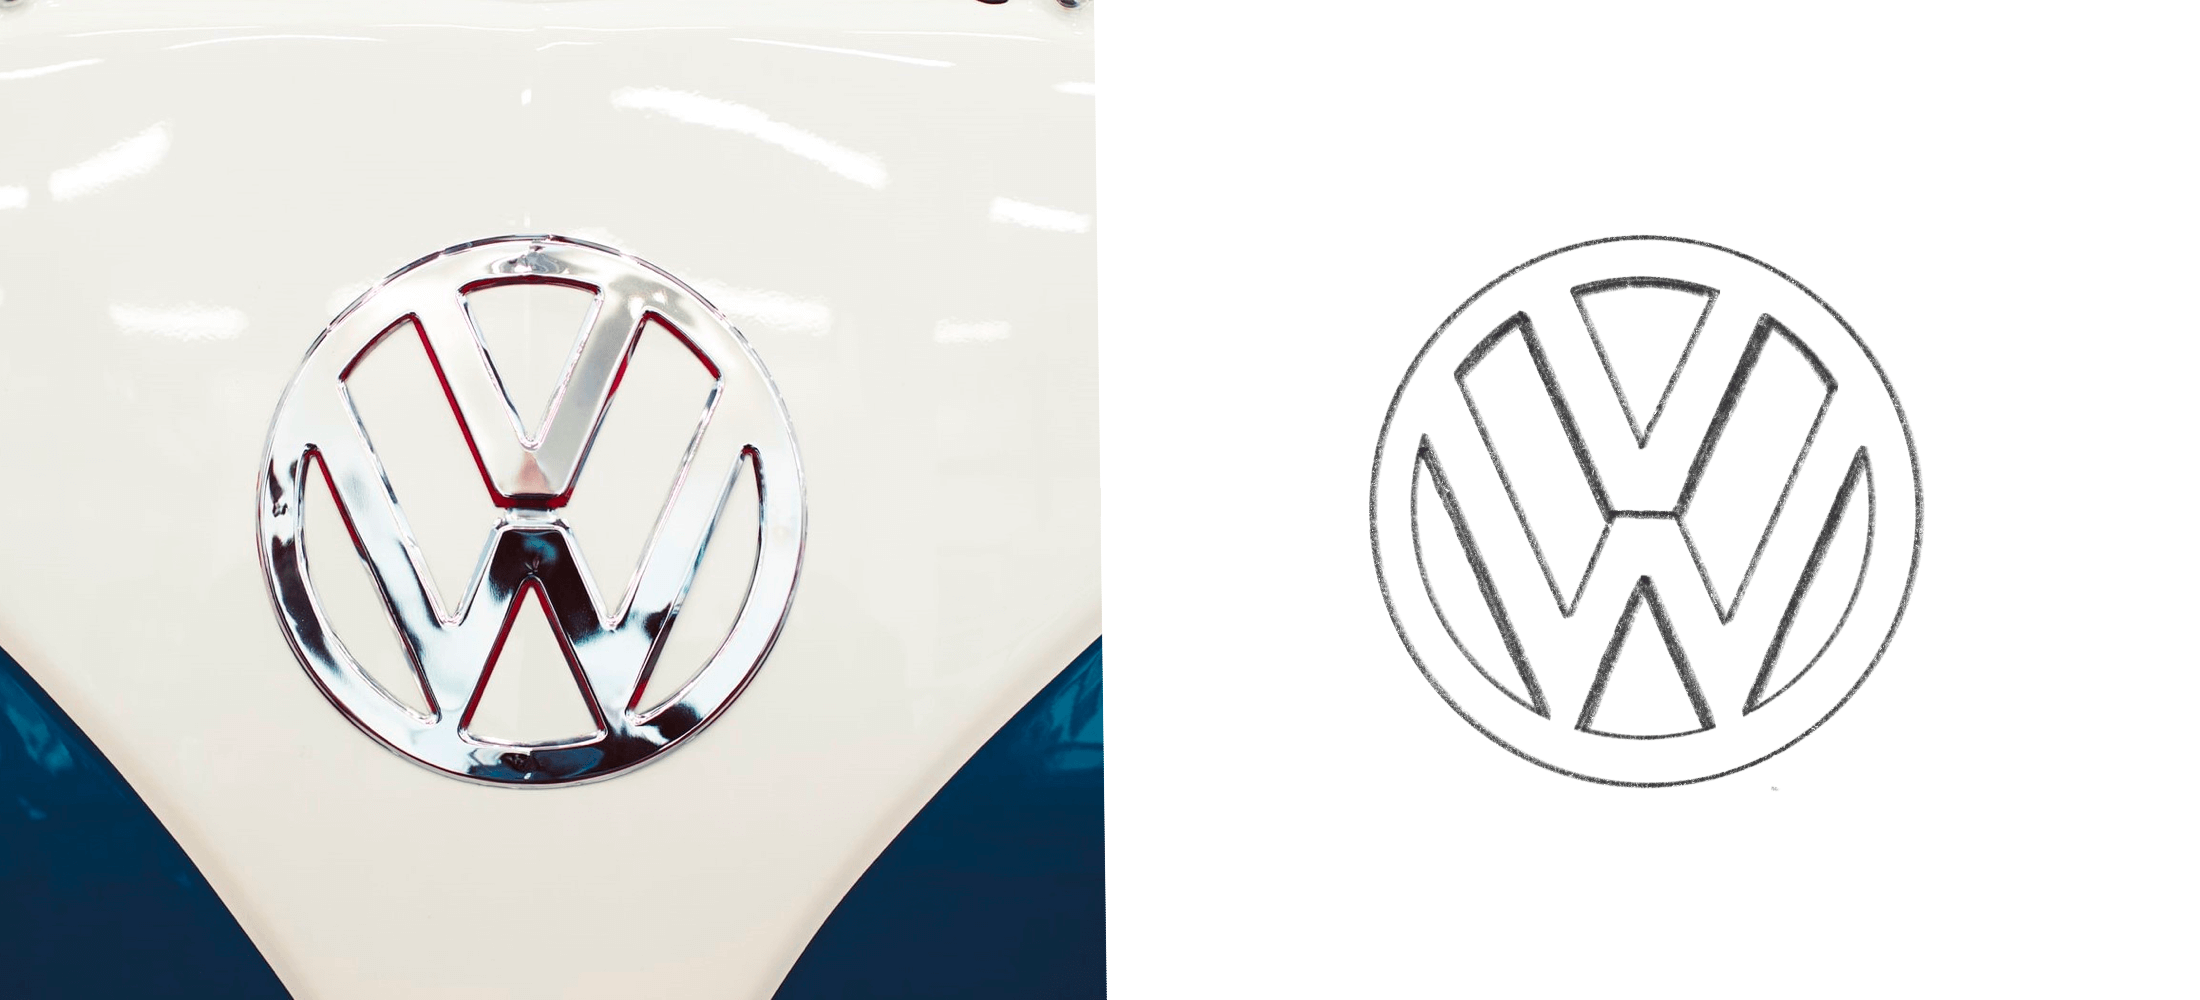 The shiny Volkswagen logo emblem on a VW bus alongside a drawn version of the Volkswagen logo